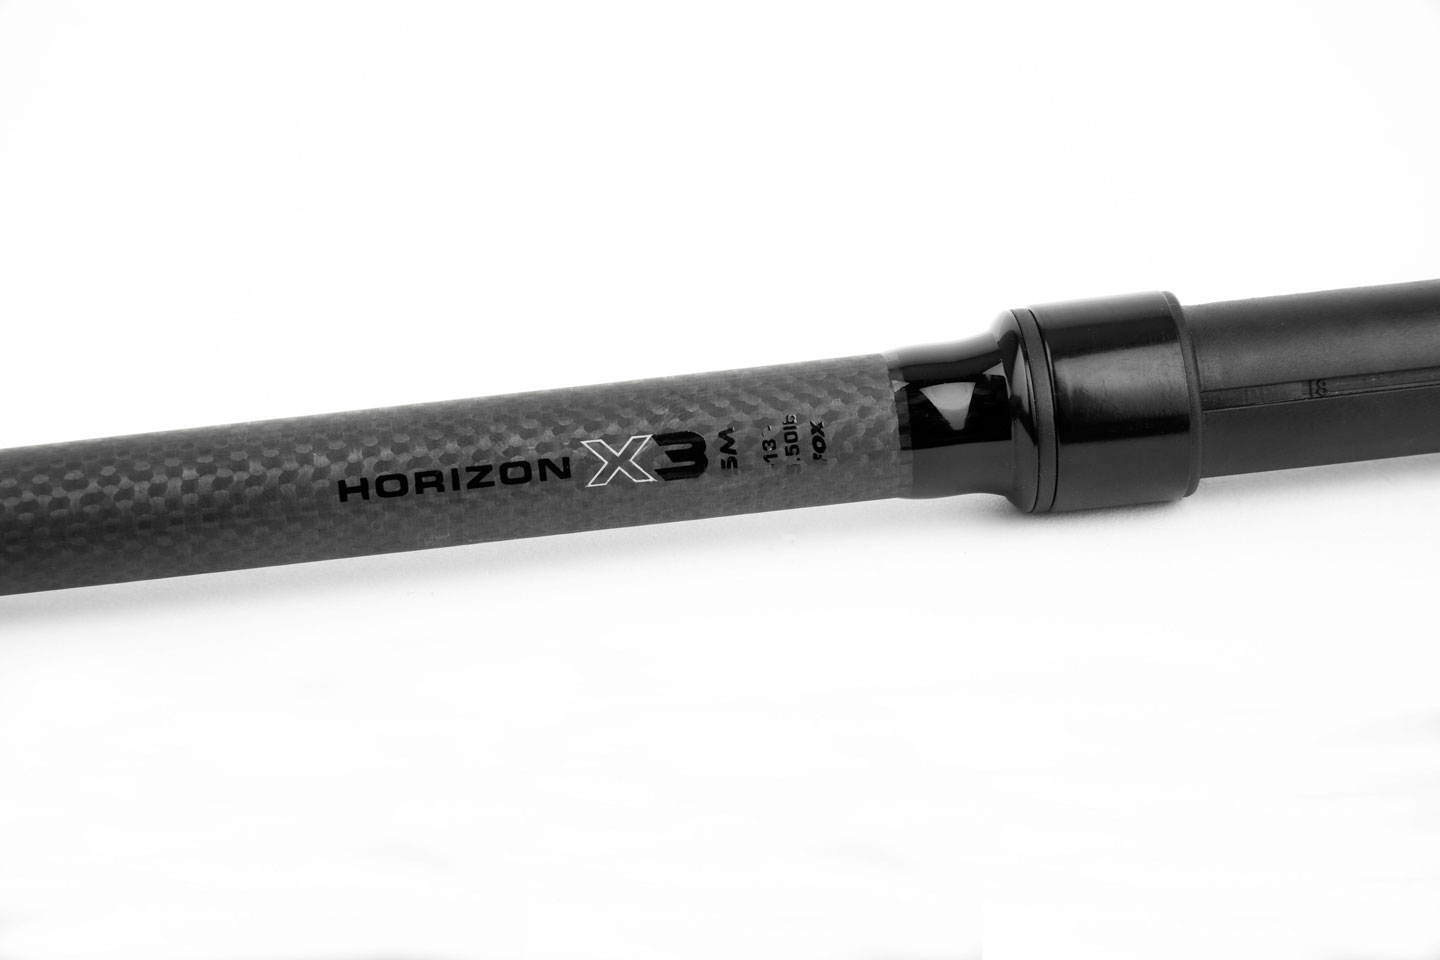 Fox Horizon X3 Rods